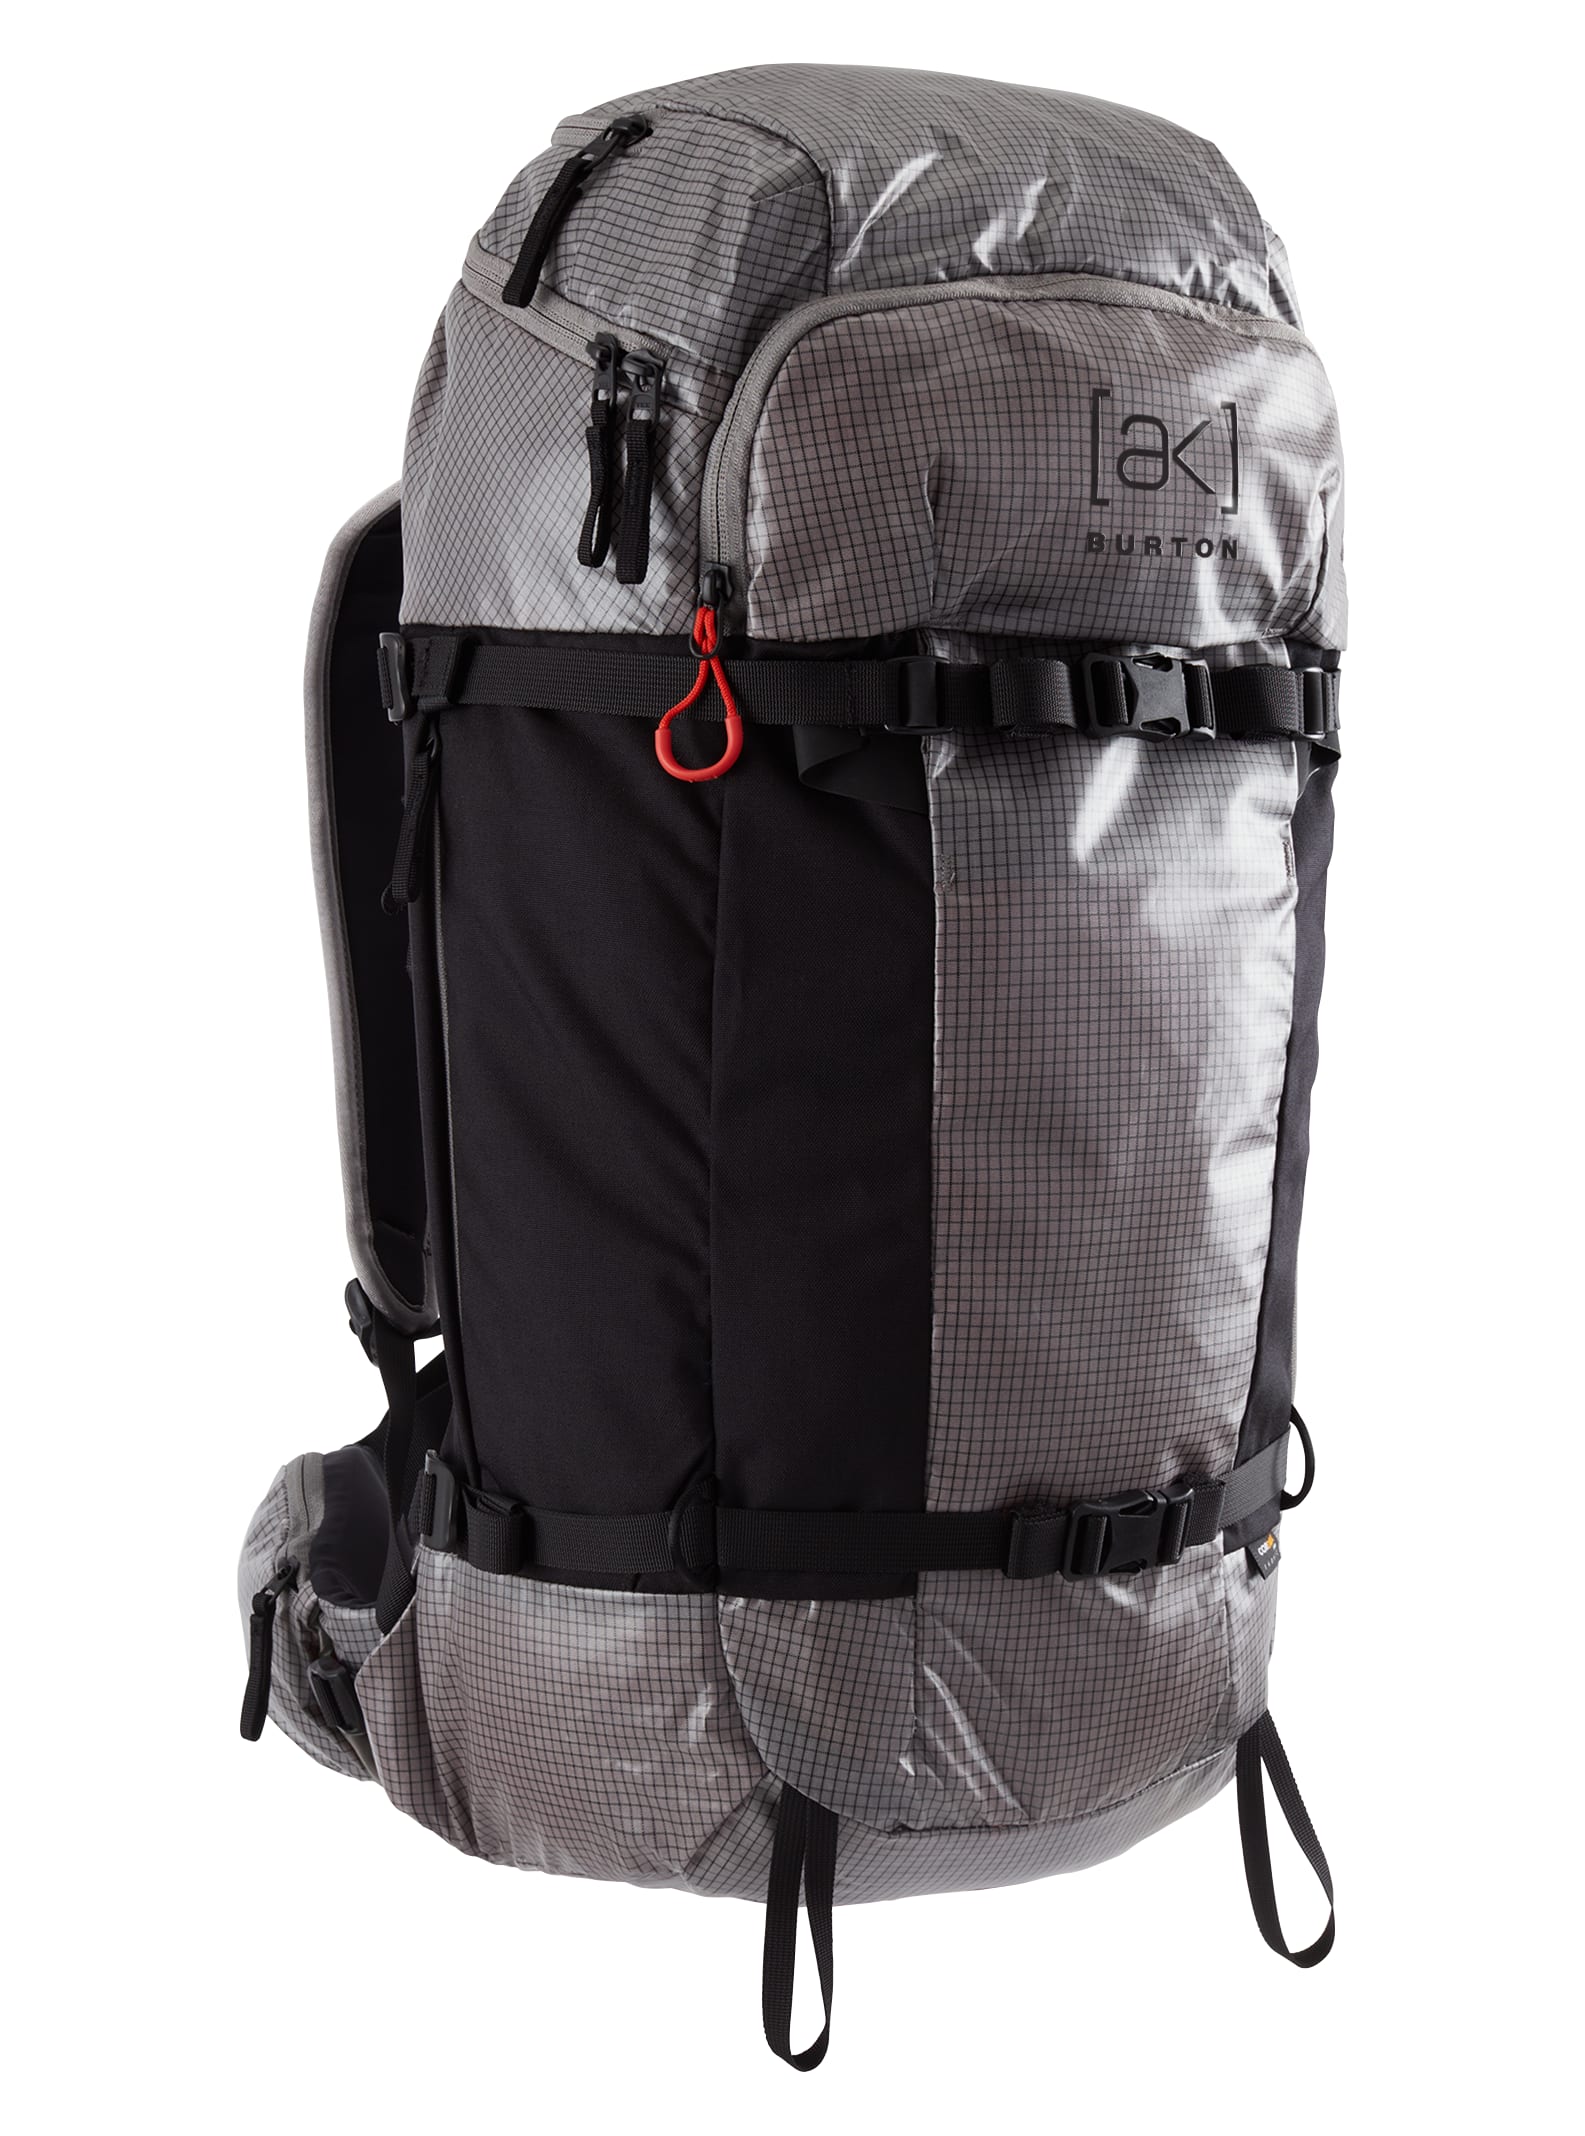 ak] Dispatcher 35L Backpack | Burton.com Winter 2023 ES